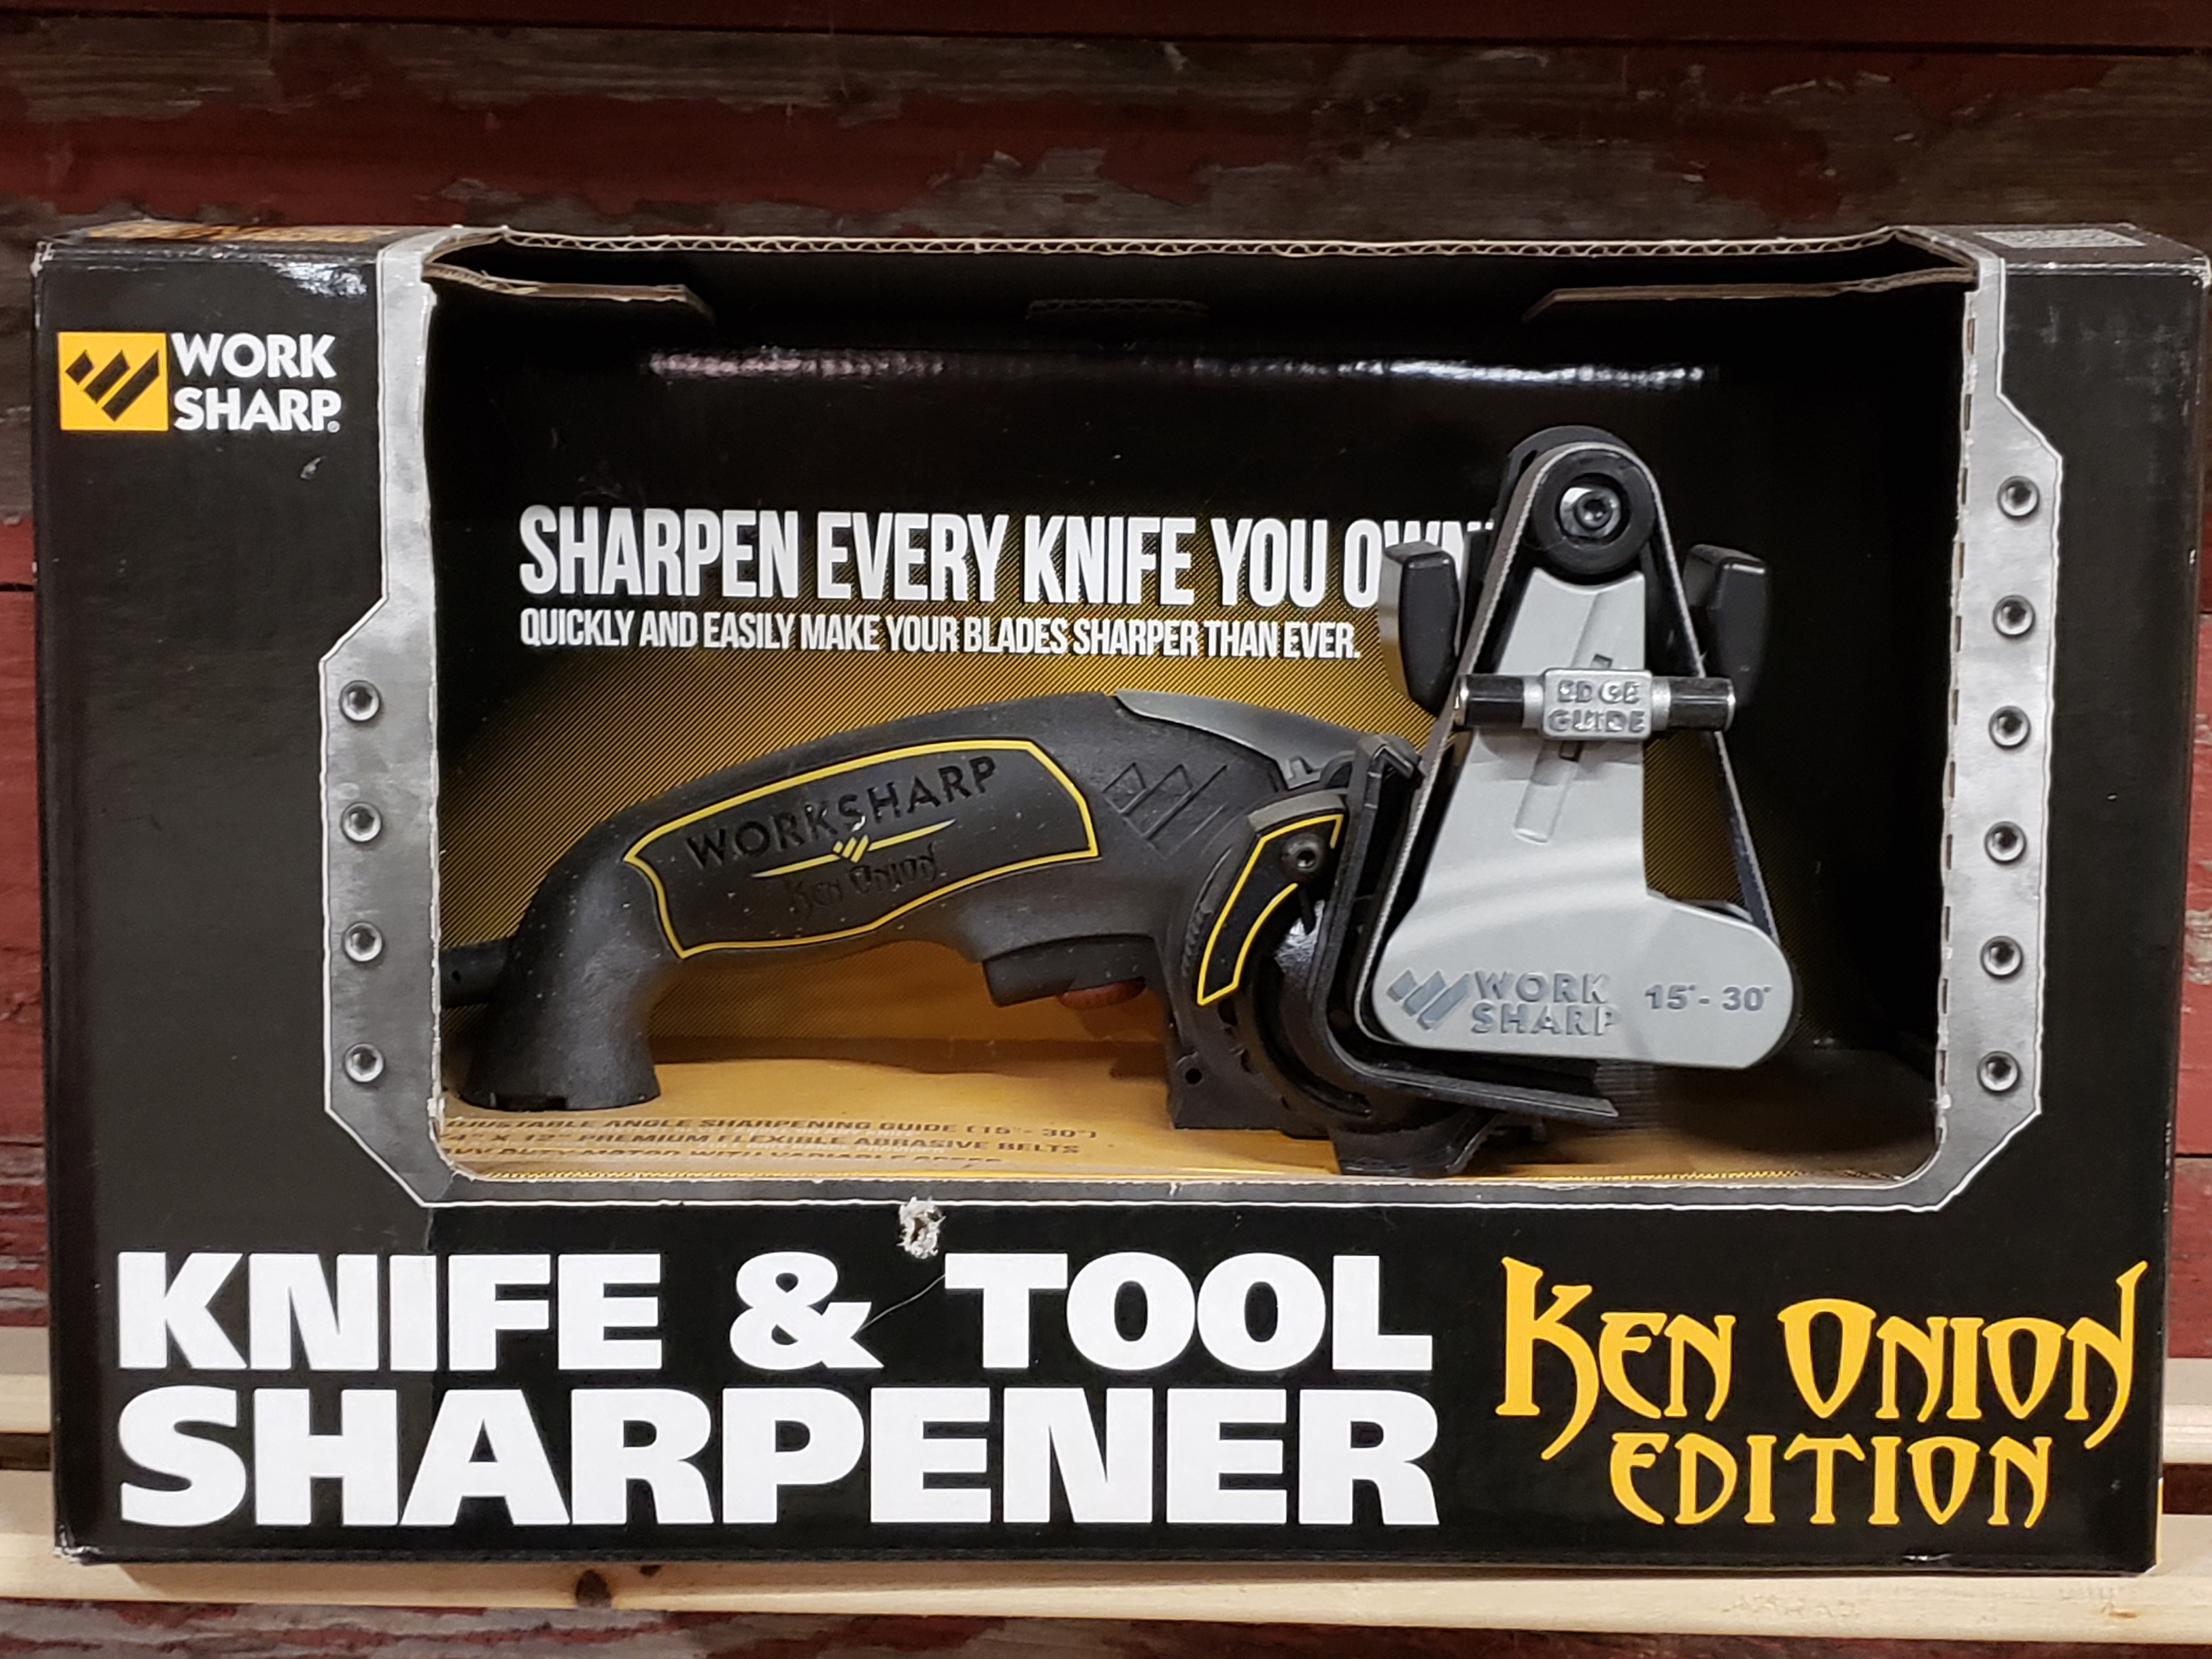 Work Sharp Ken Onion Edition Knife and Tool Sharpener